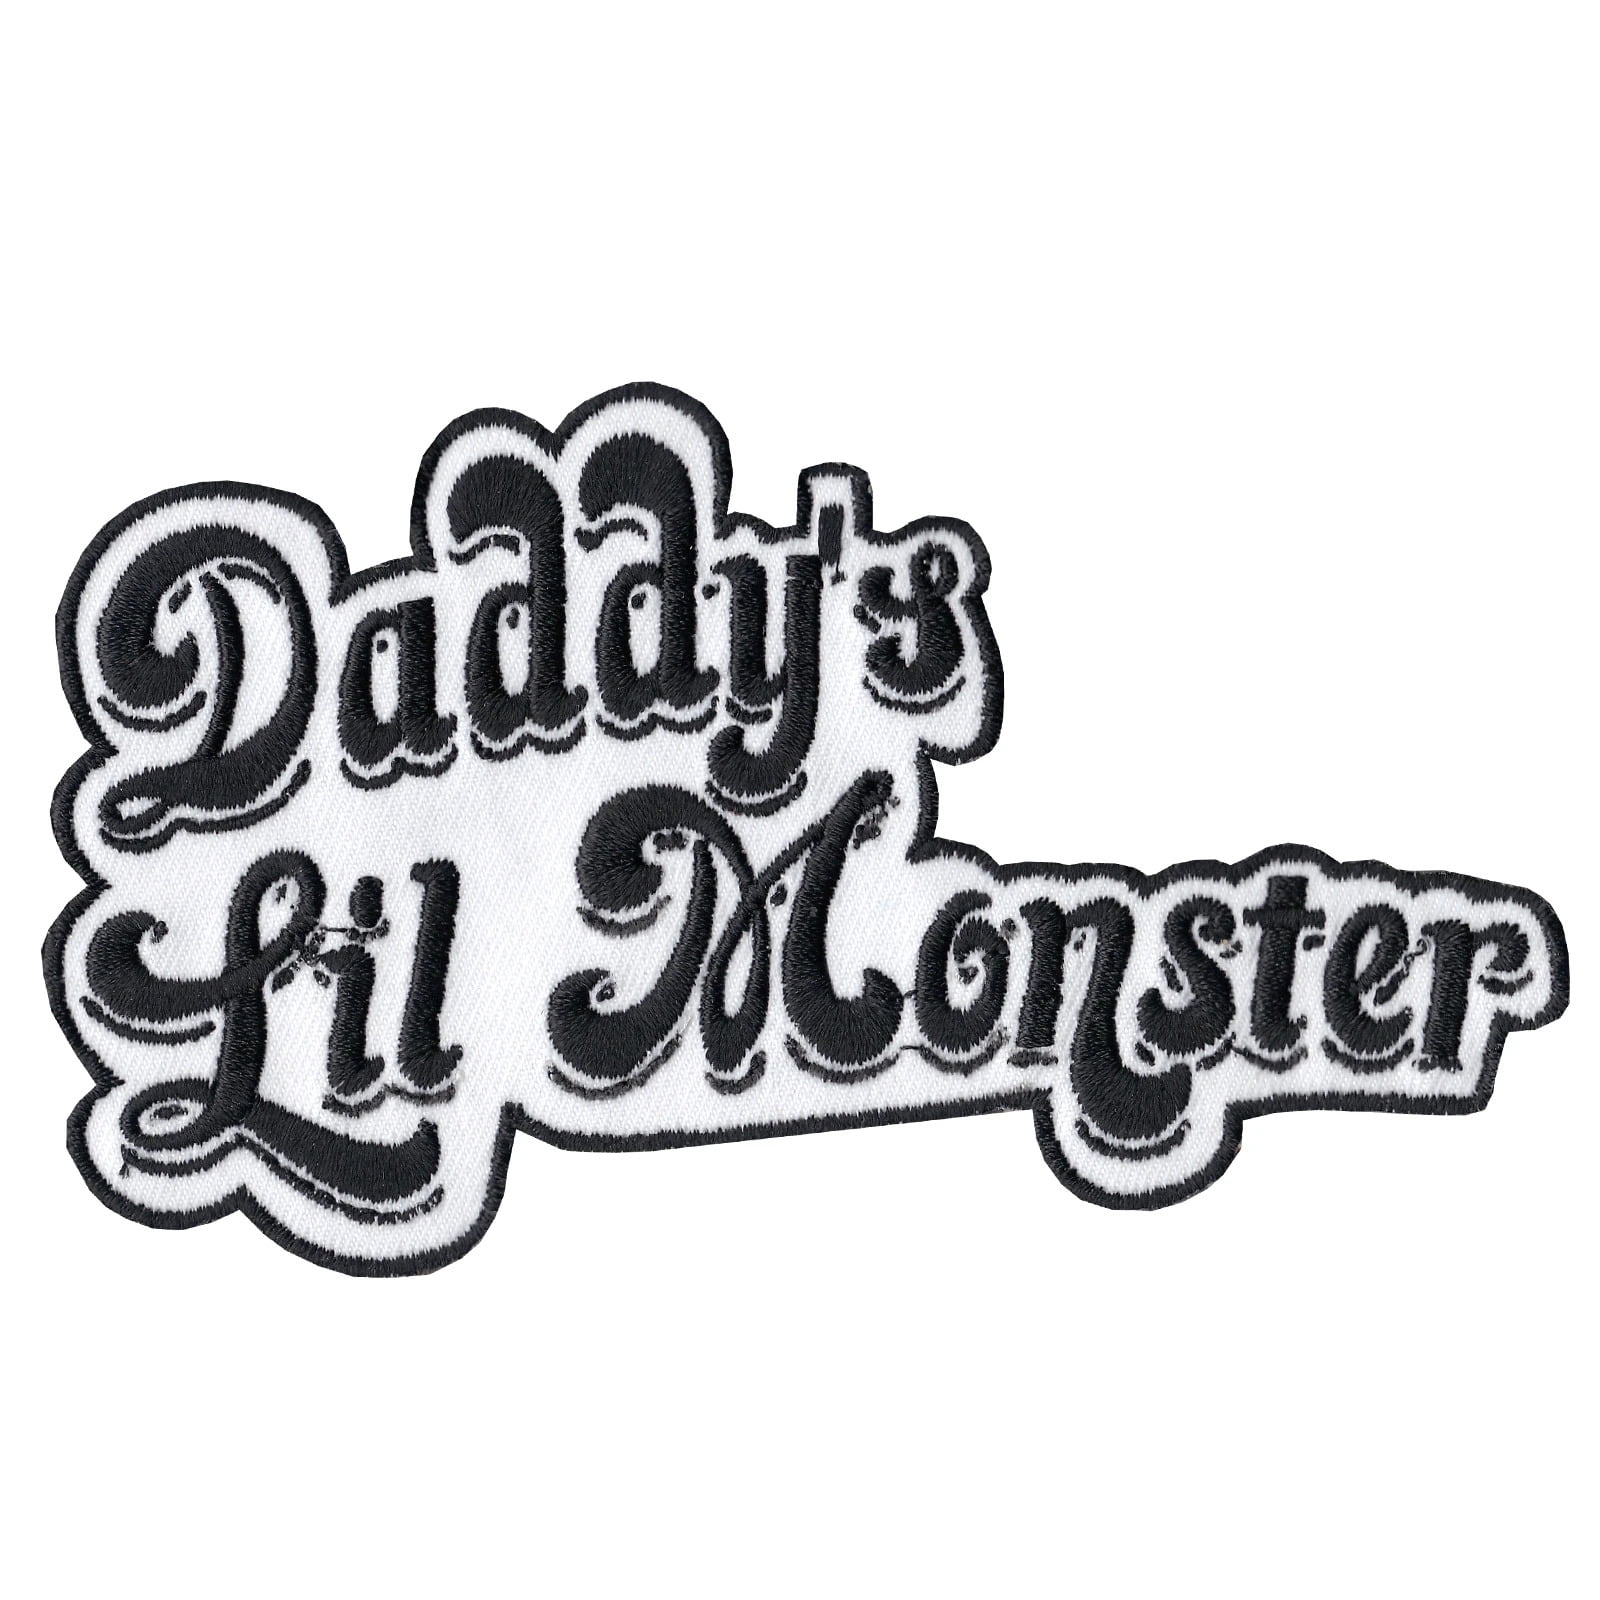 Daddys little monster